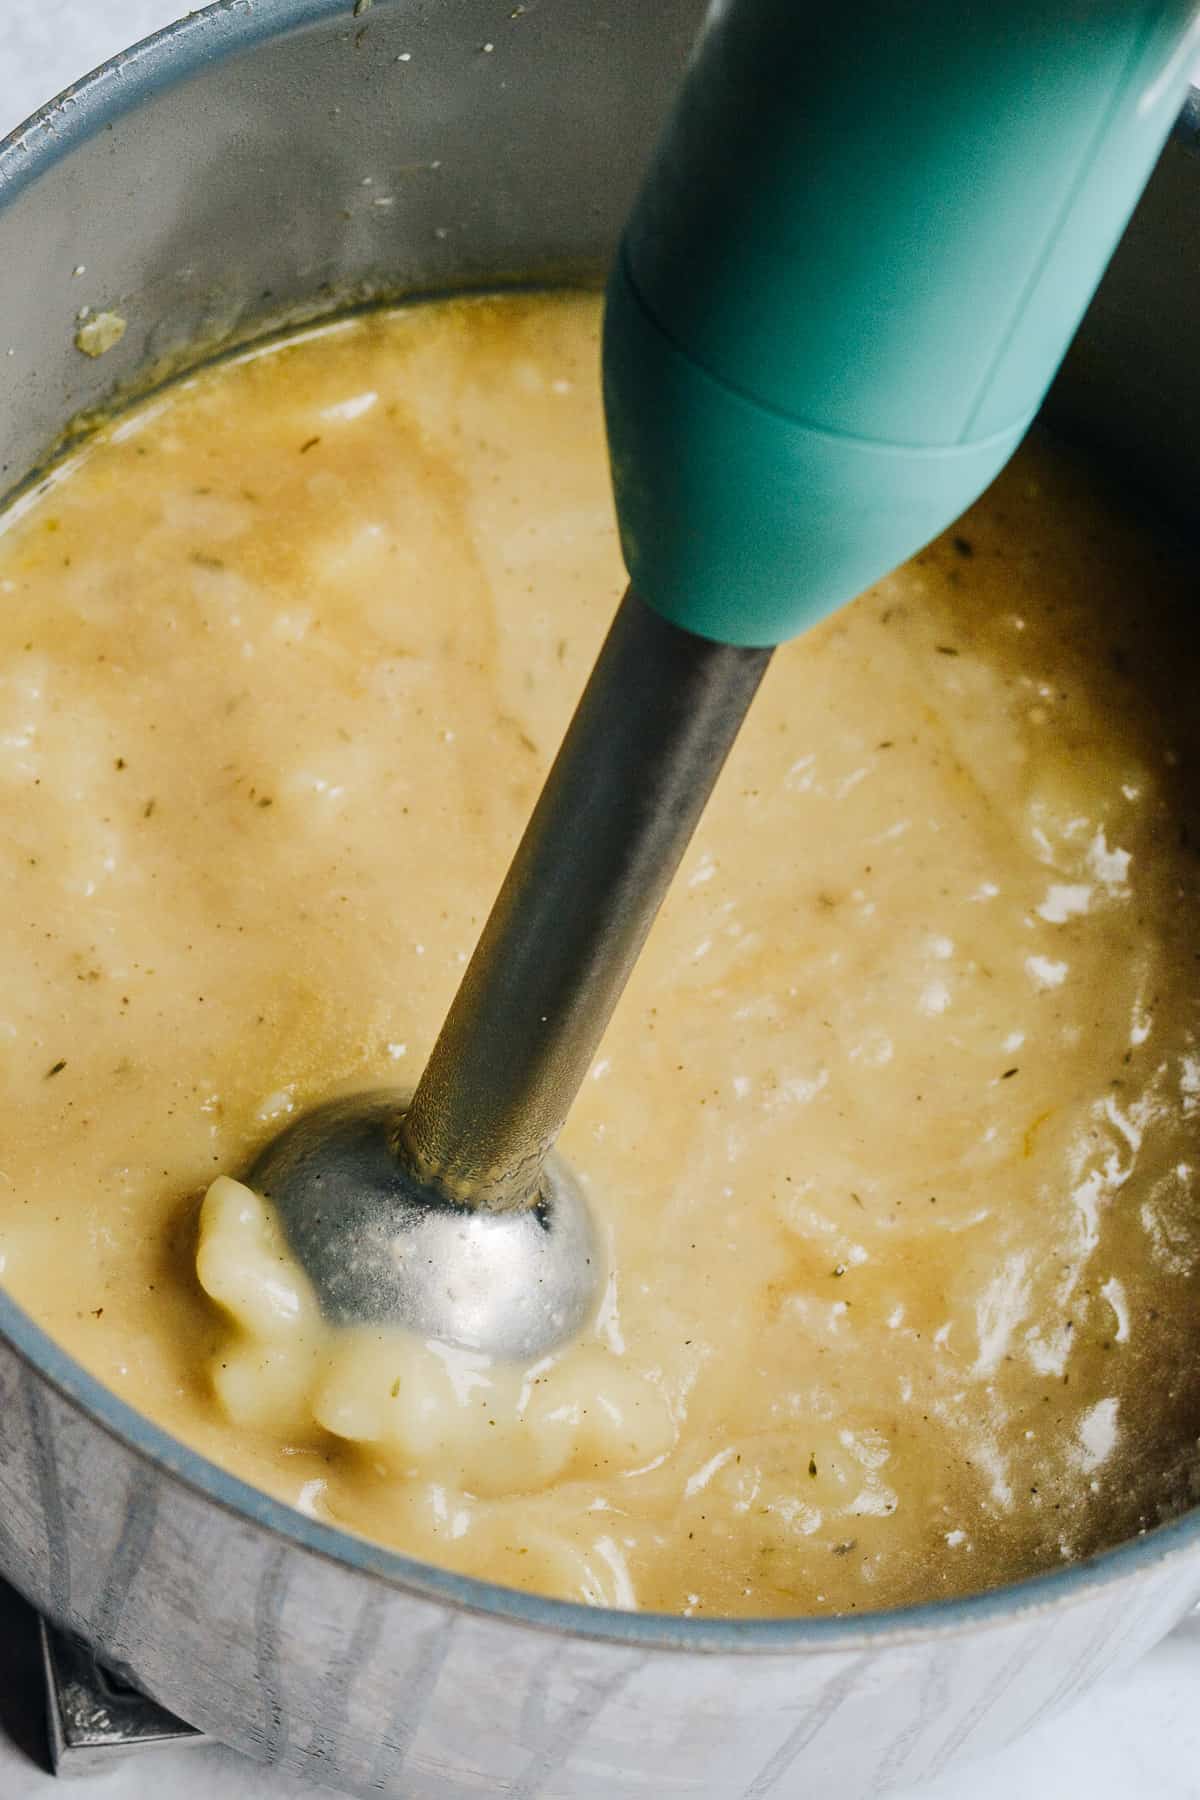 Hand blender blending the potatoes in soup in large pot.